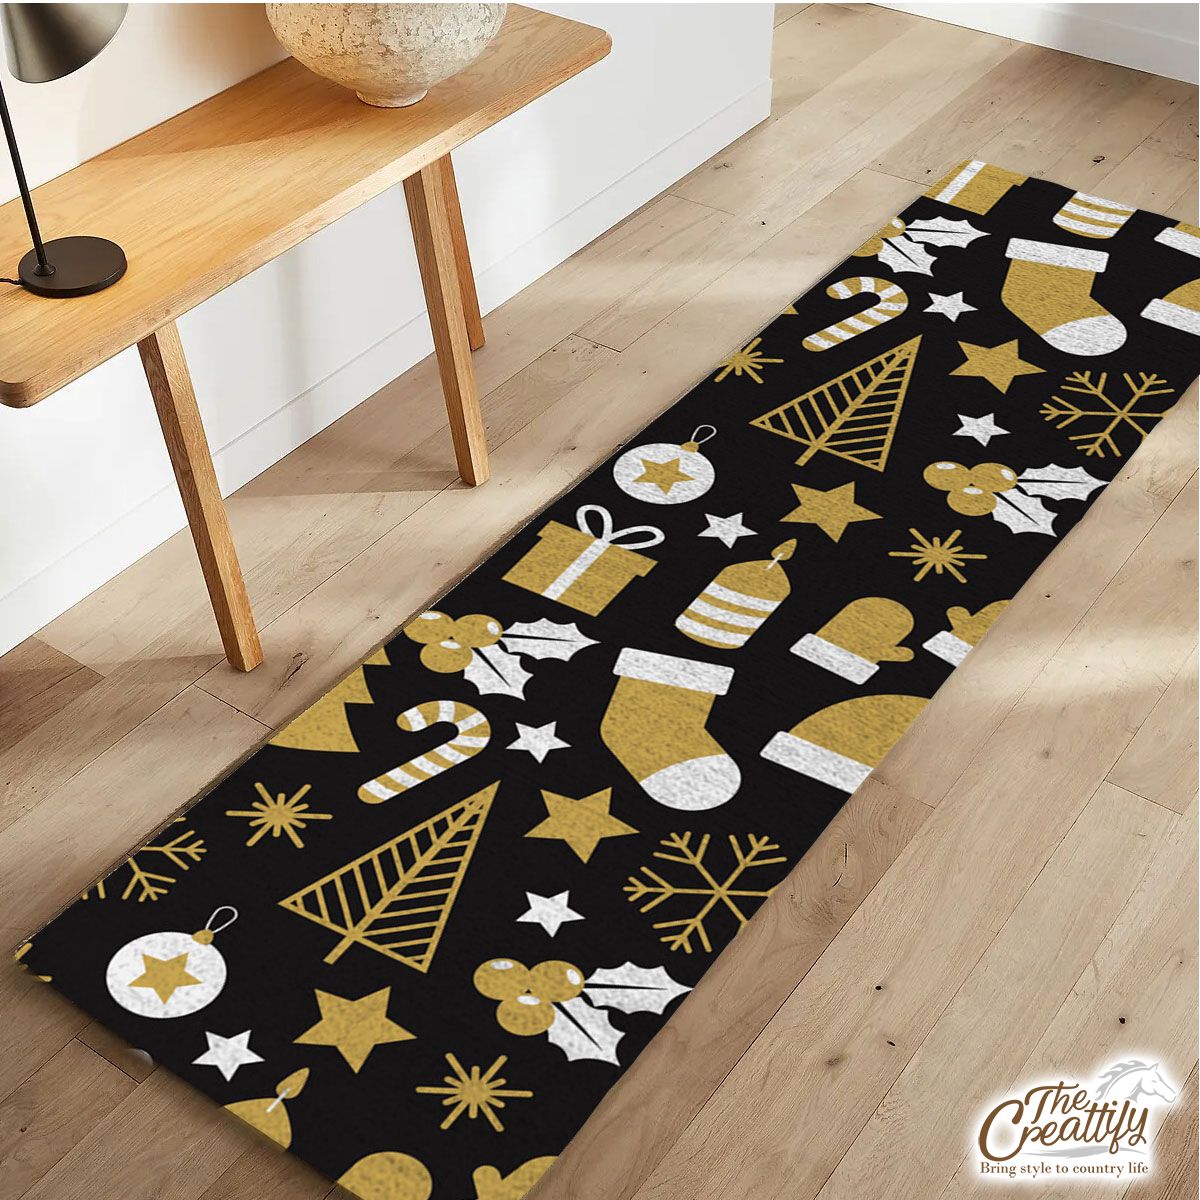 White And Gold Christmas Socks, Christmas Tree, Candy Cane On Black Background Runner Carpet